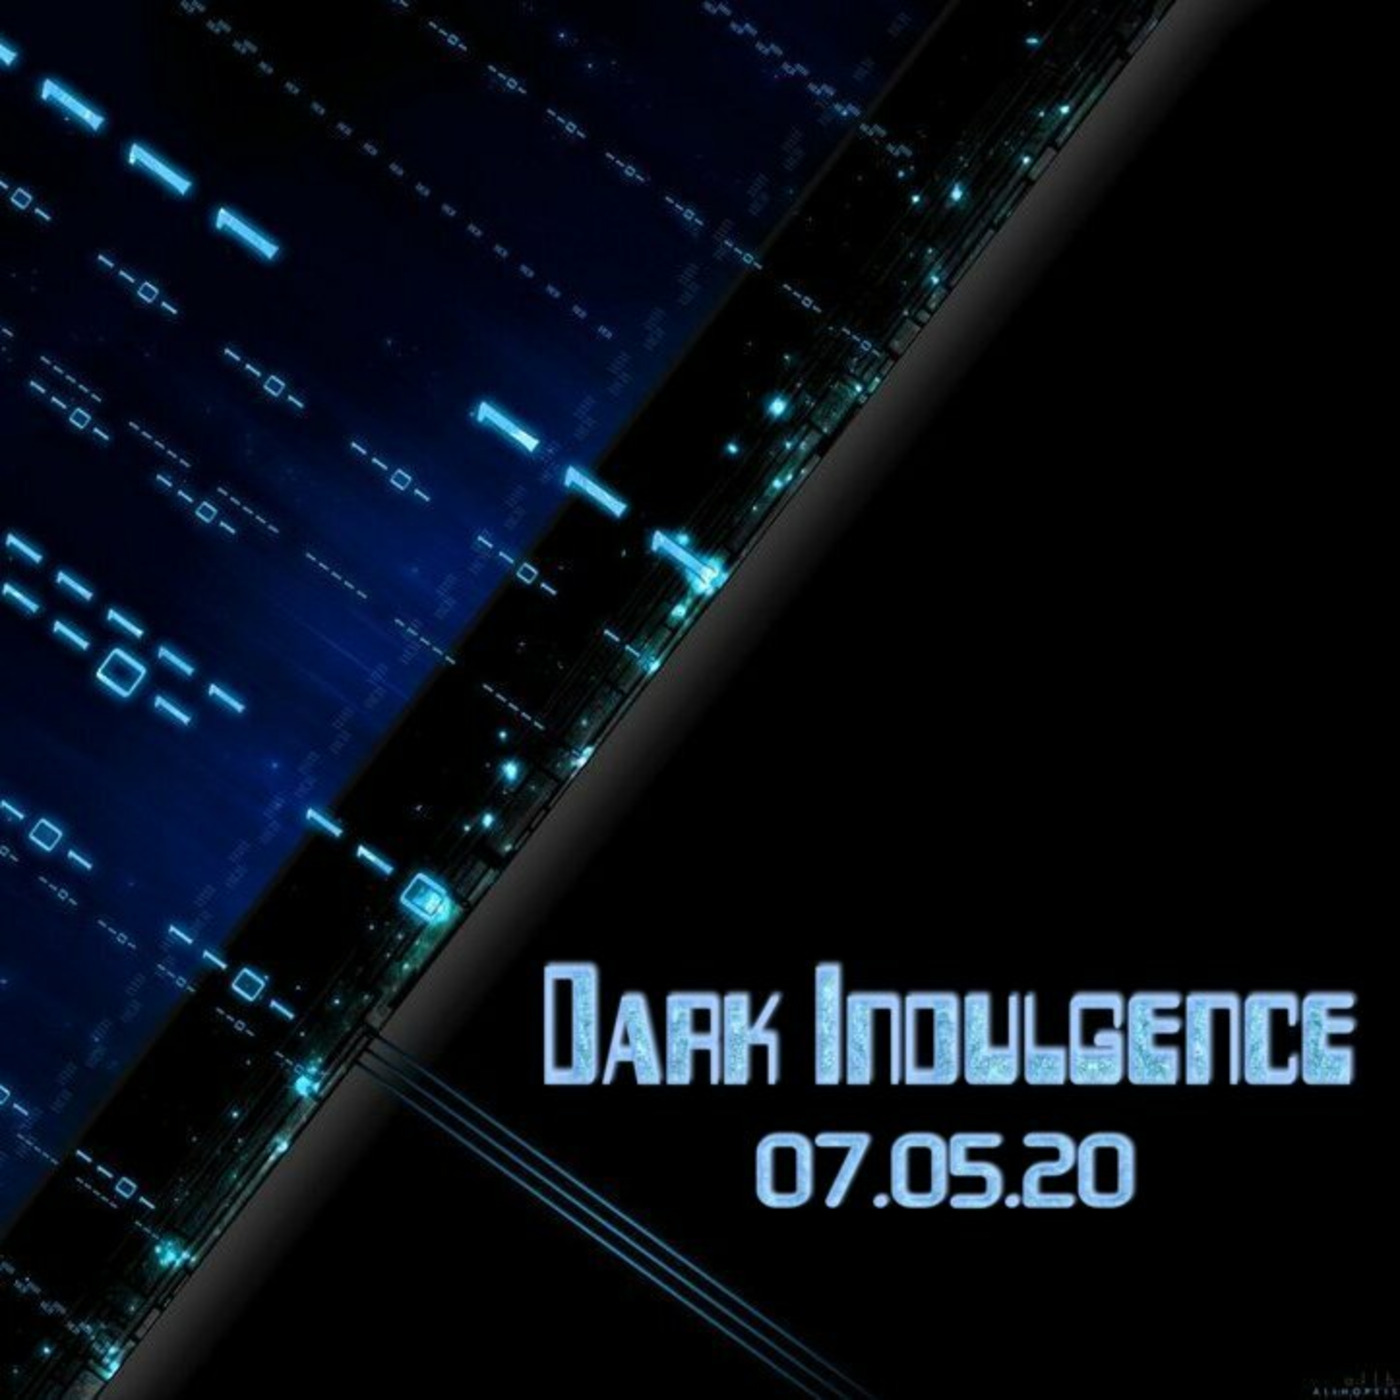 Dark Indulgence 07.05.20 Industrial | EBM | Synthpop Mixshow by Scott Durand : djscottdurand.com